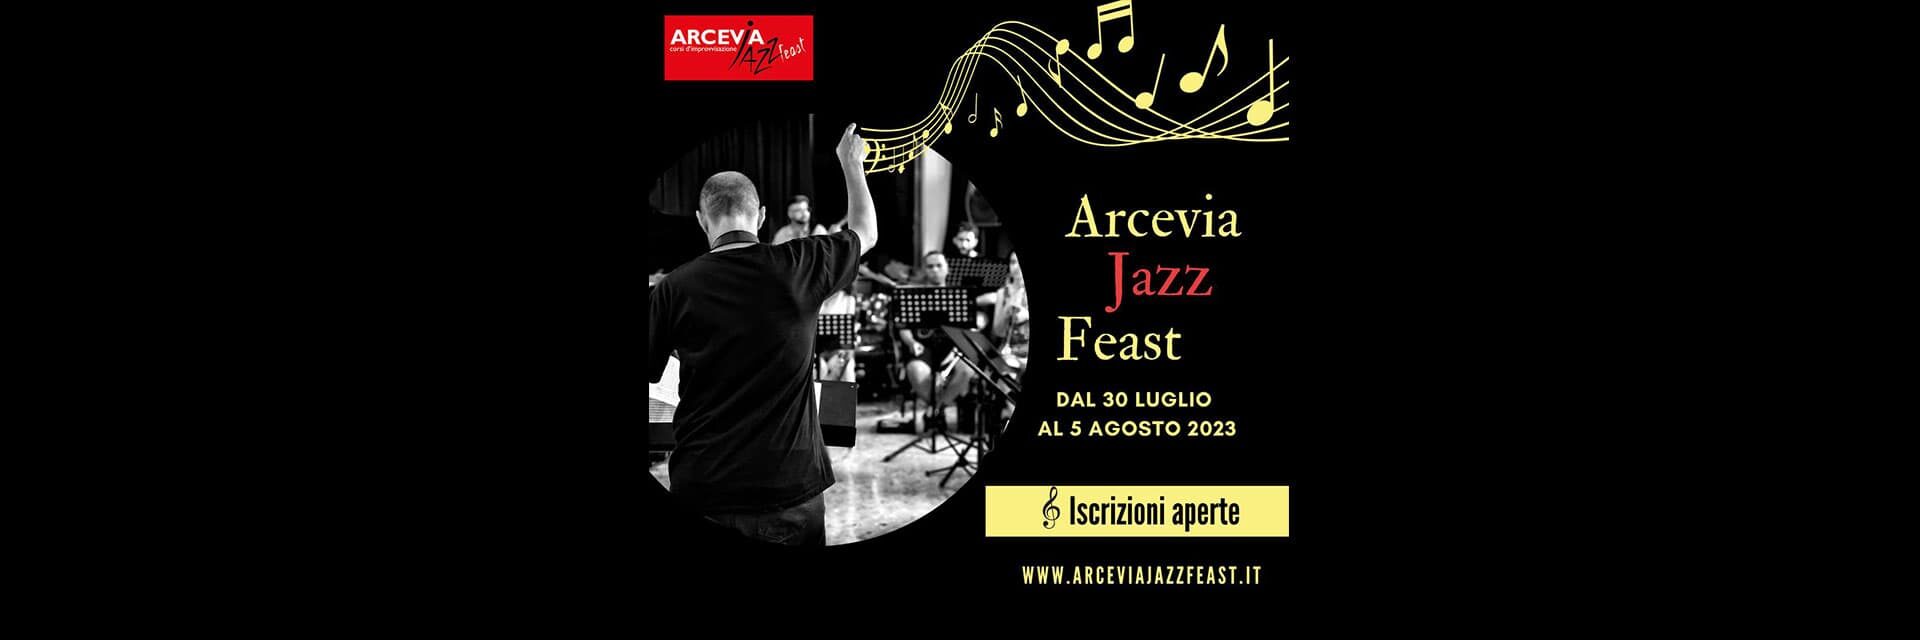 immagine Arcevia Jazz Feast